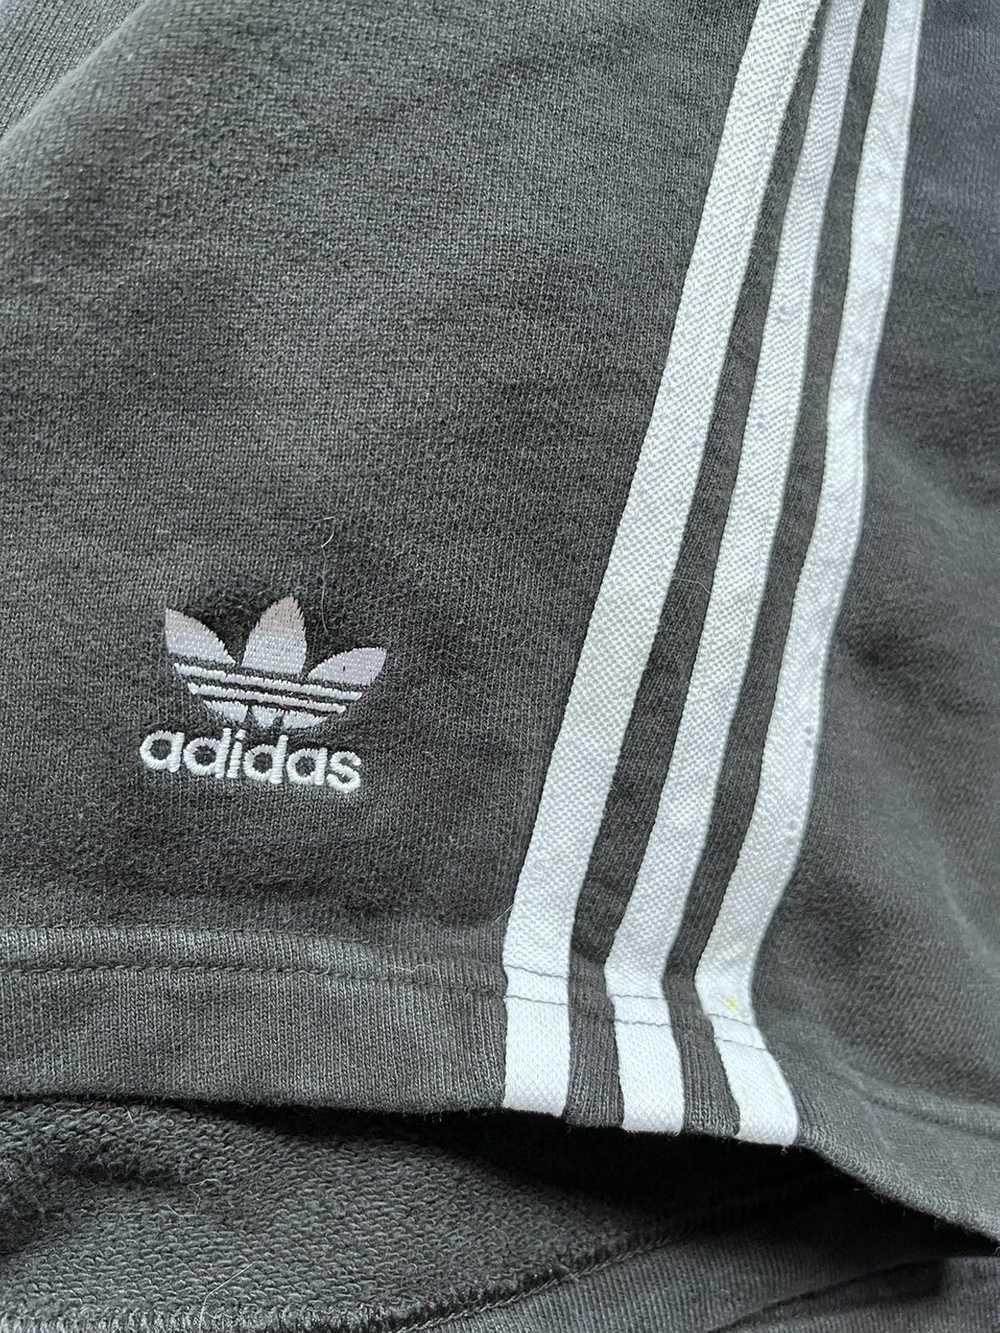 Adidas Adidas Originals 3 Stripe Shorts Black - image 3